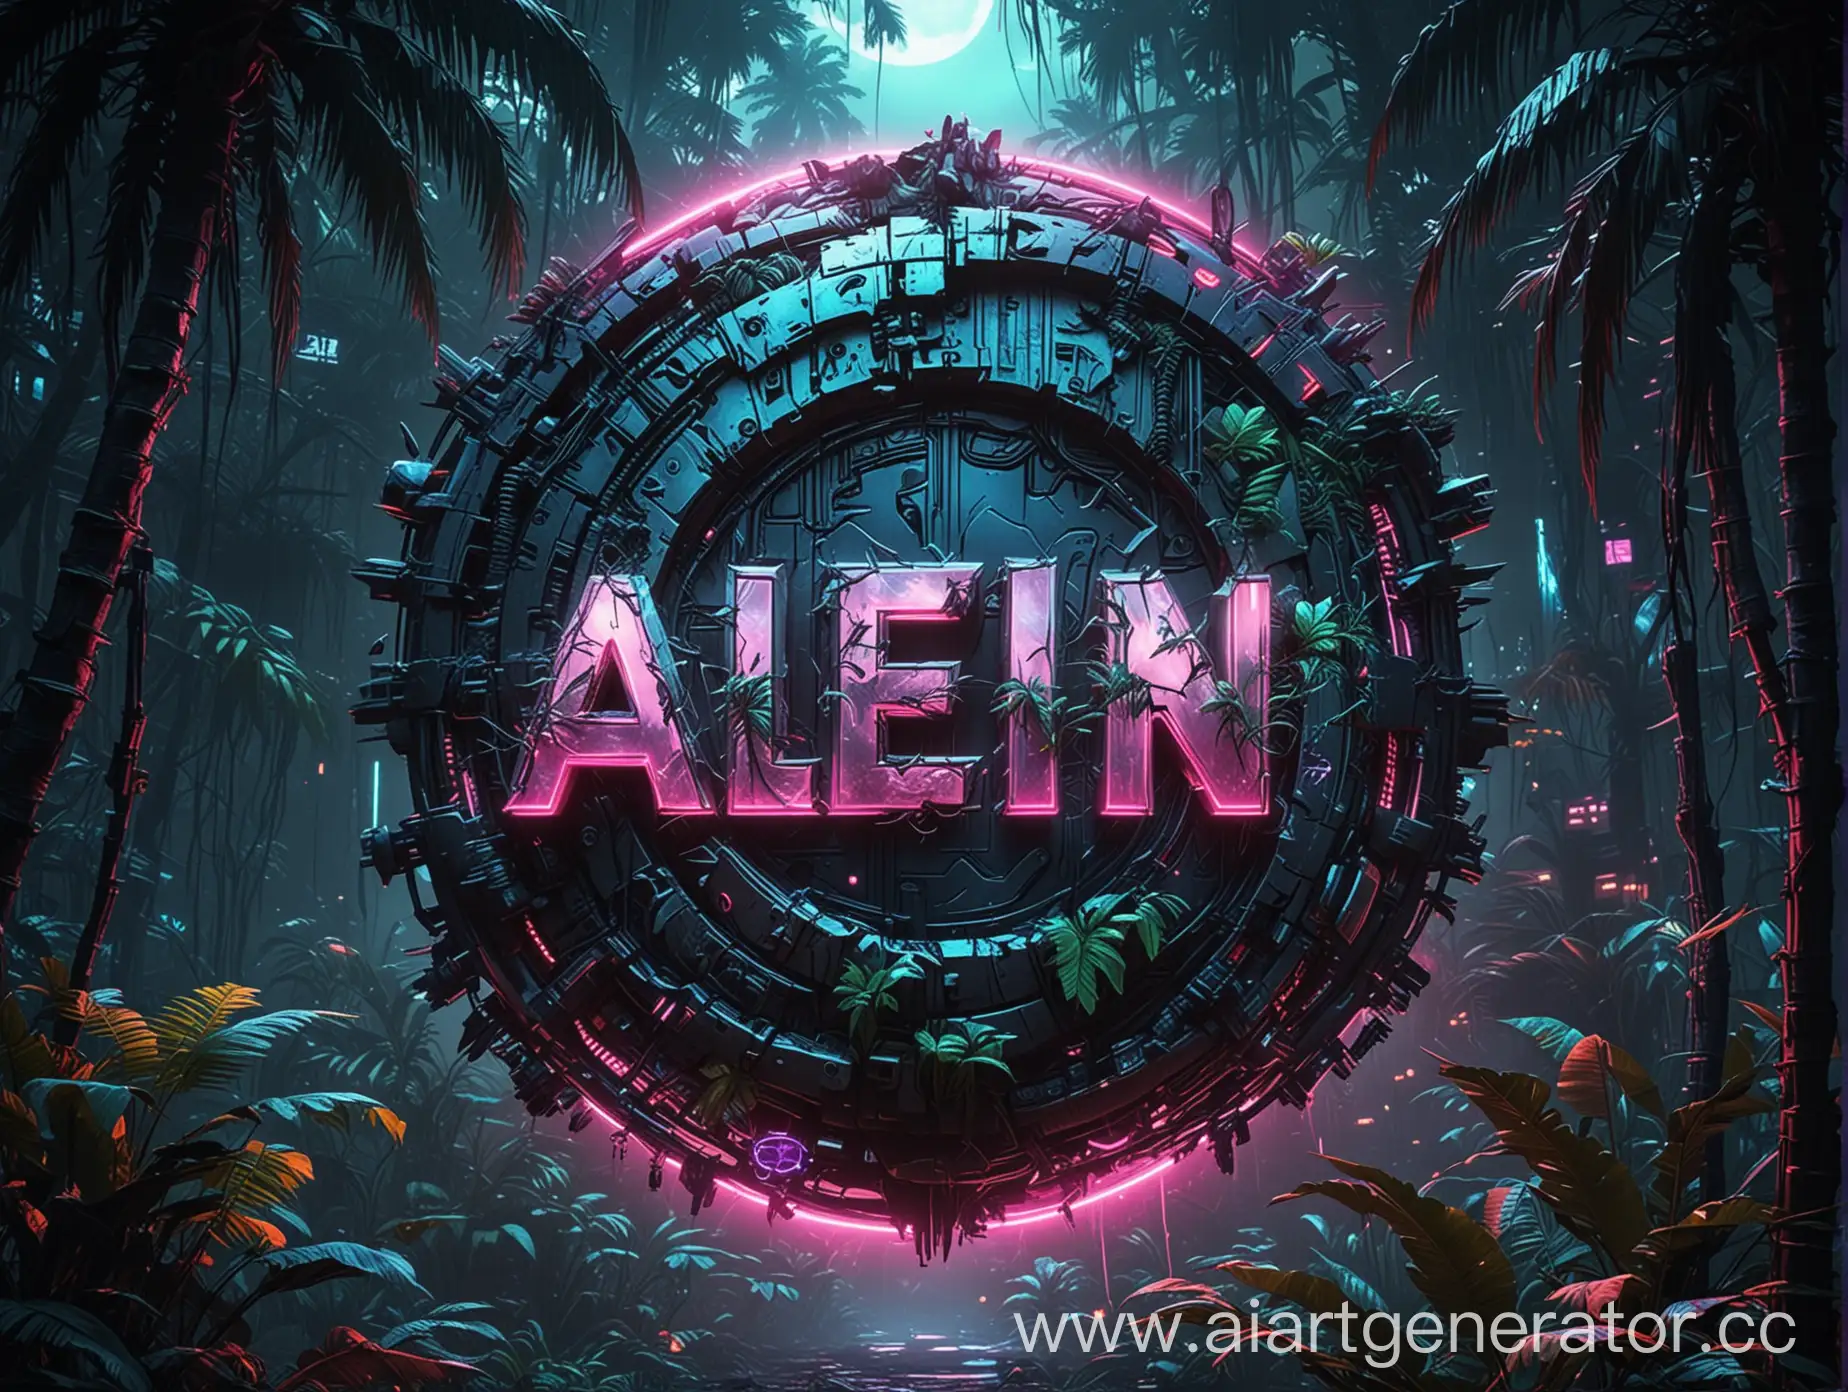 Futuristic-Cyberpunk-Logo-Design-with-Neon-R-N-Symbols-in-Alien-Tropical-Jungle-Setting